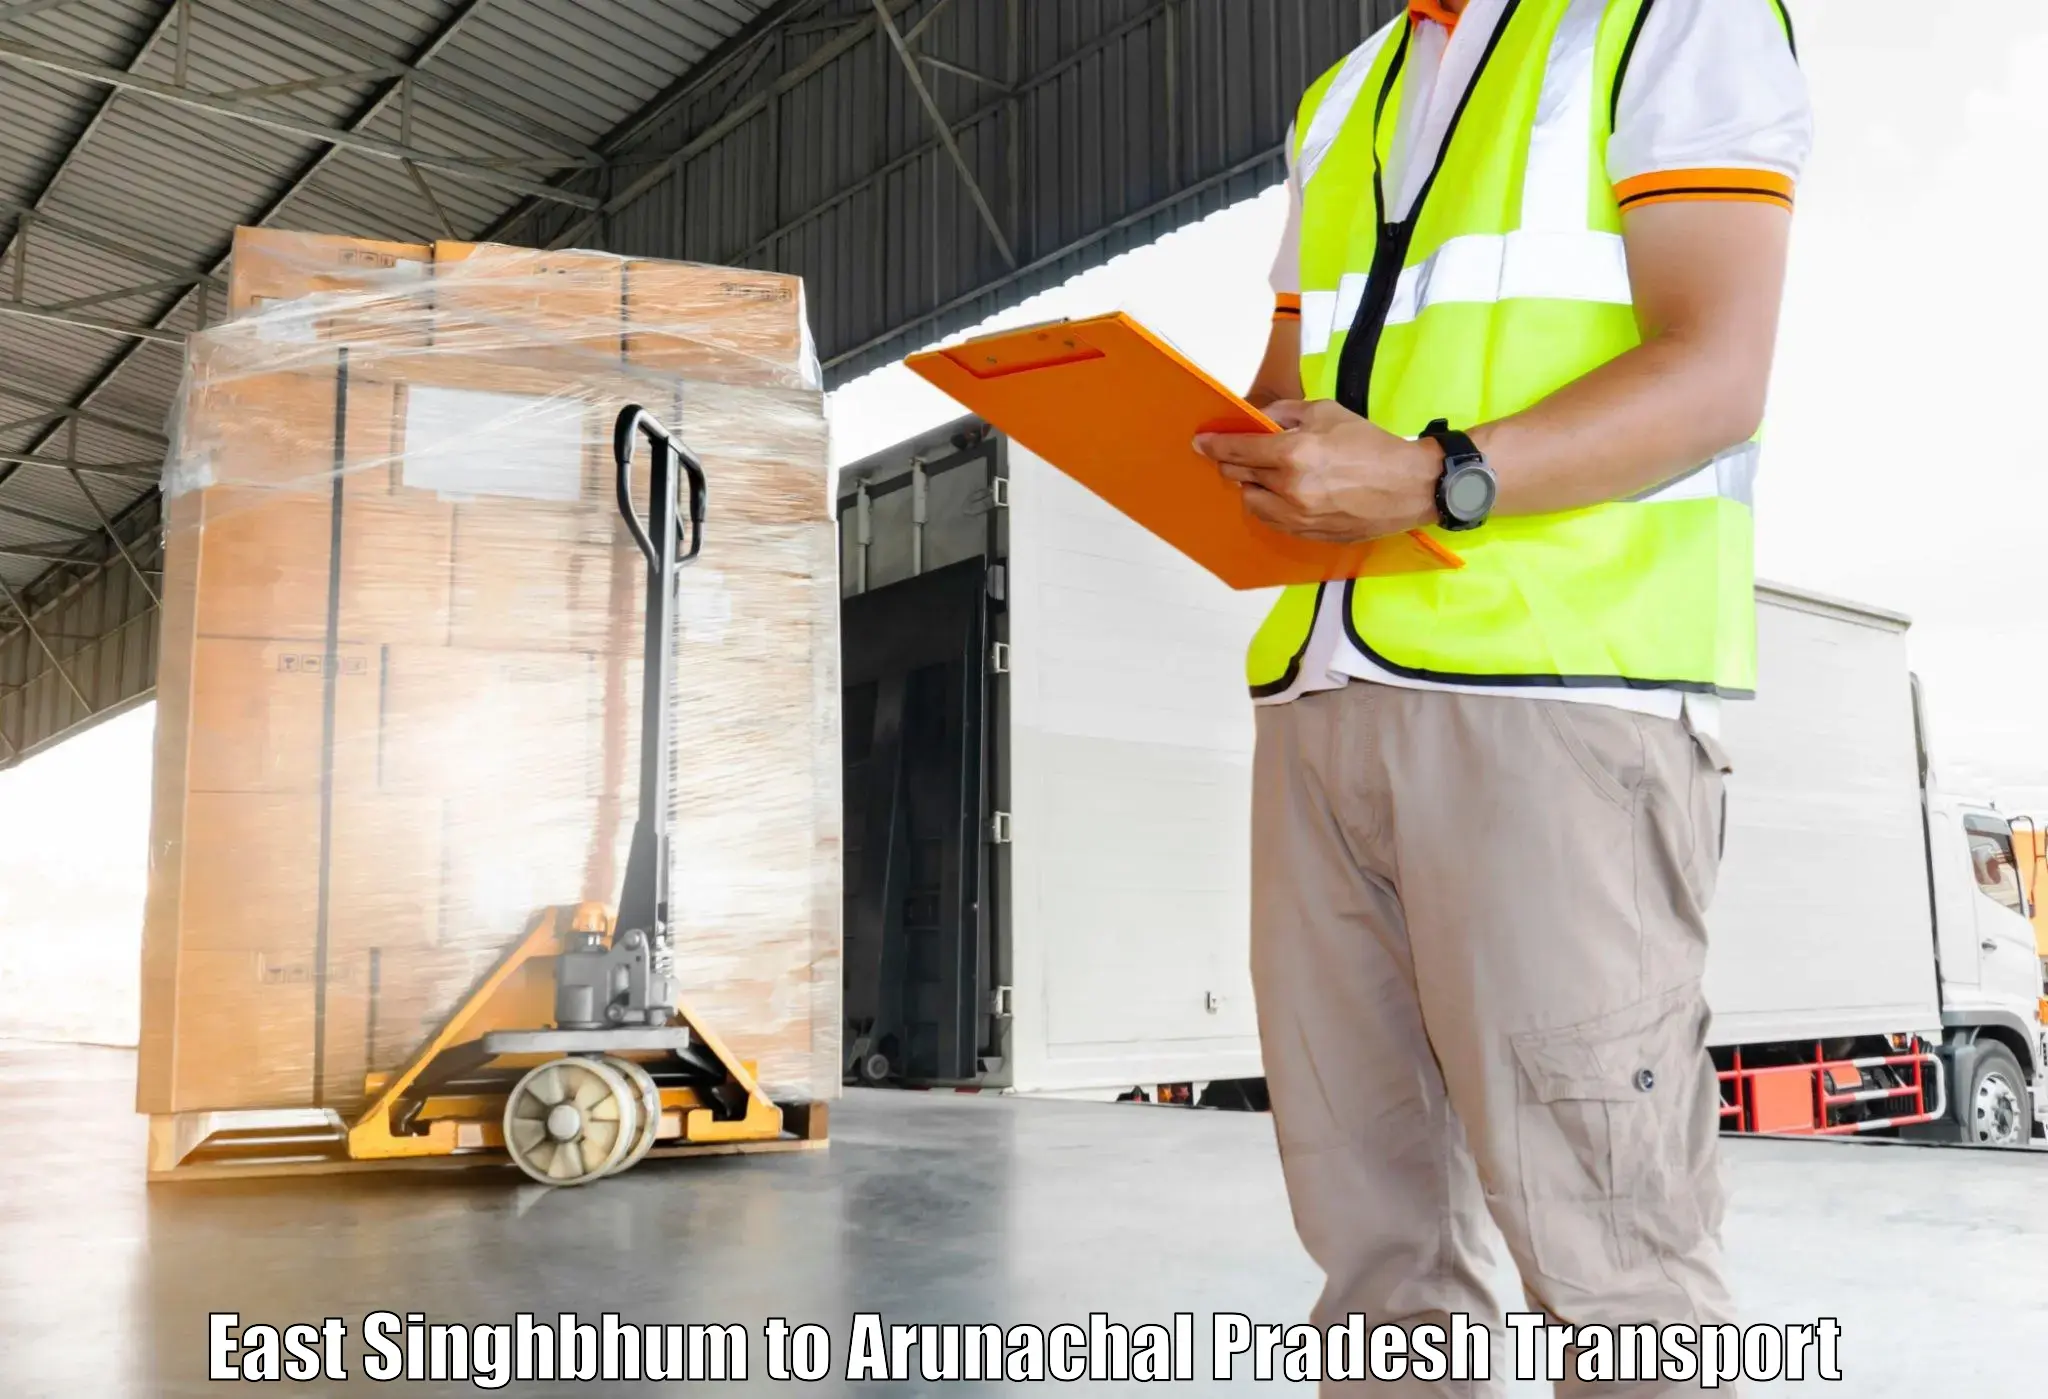 Shipping partner East Singhbhum to West Kameng